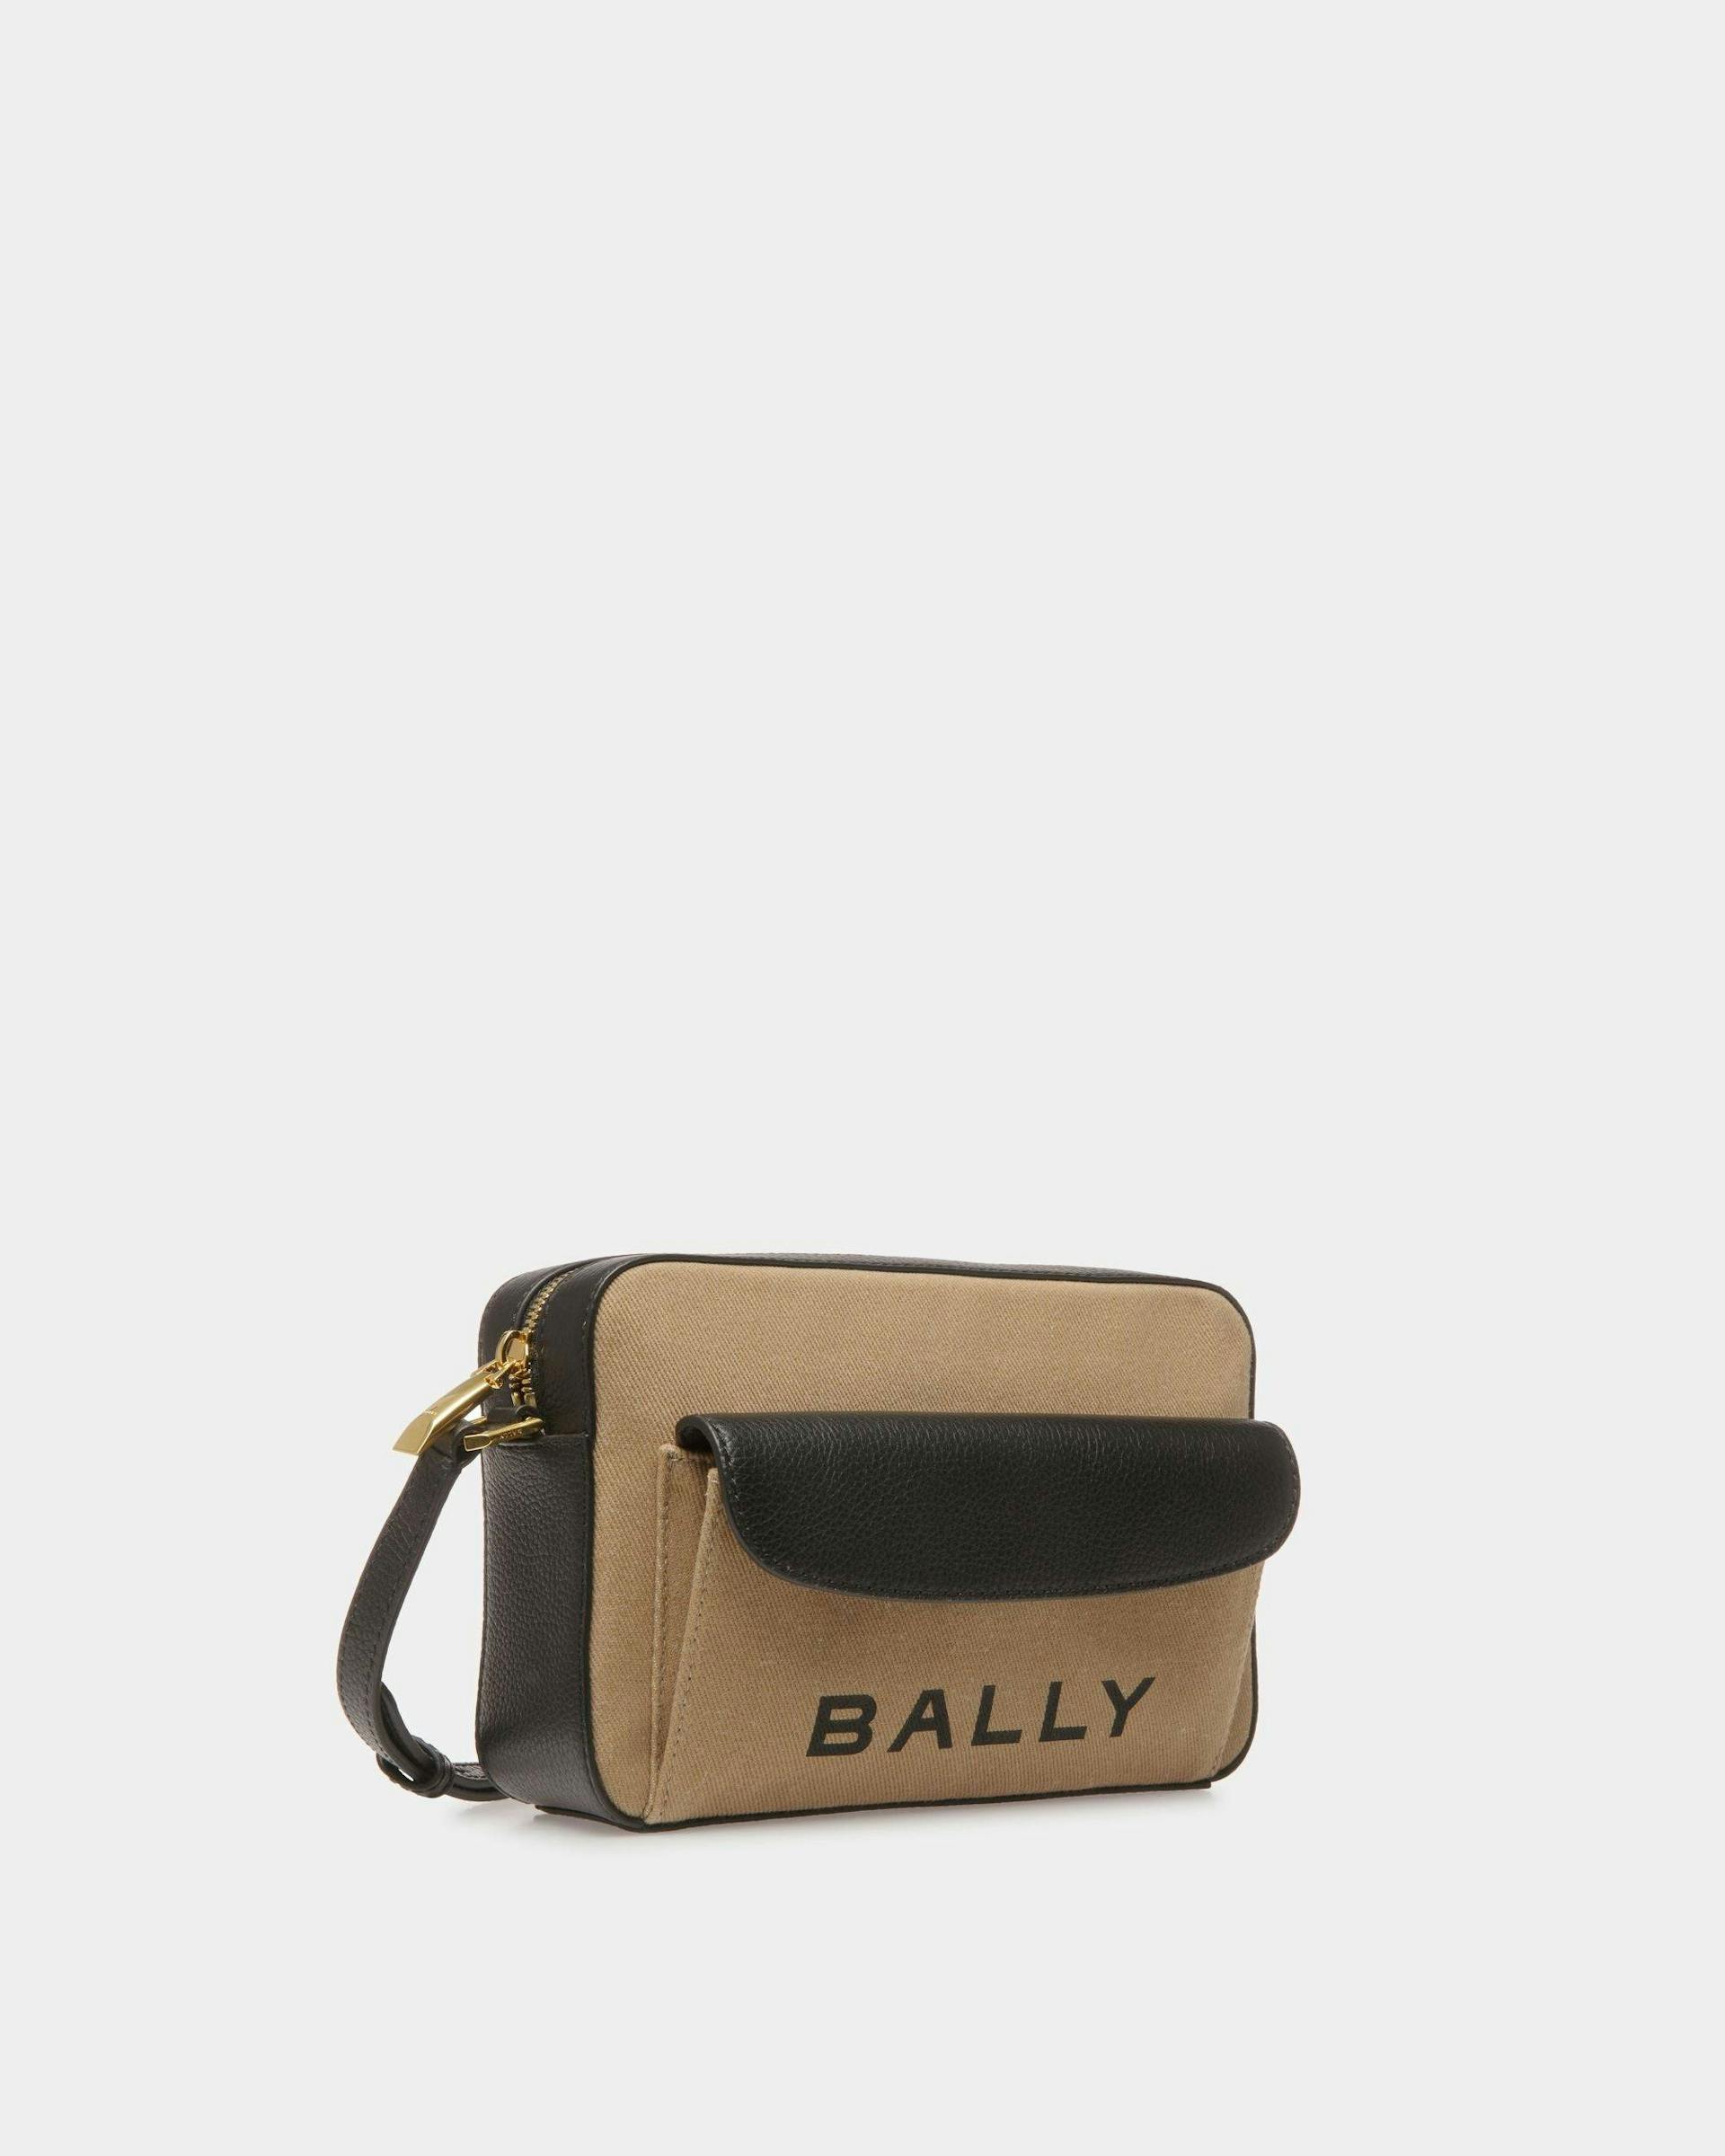 Women's Bar Crossbody Bag In Sand And Black Fabric | Bally | Still Life 3/4 Front